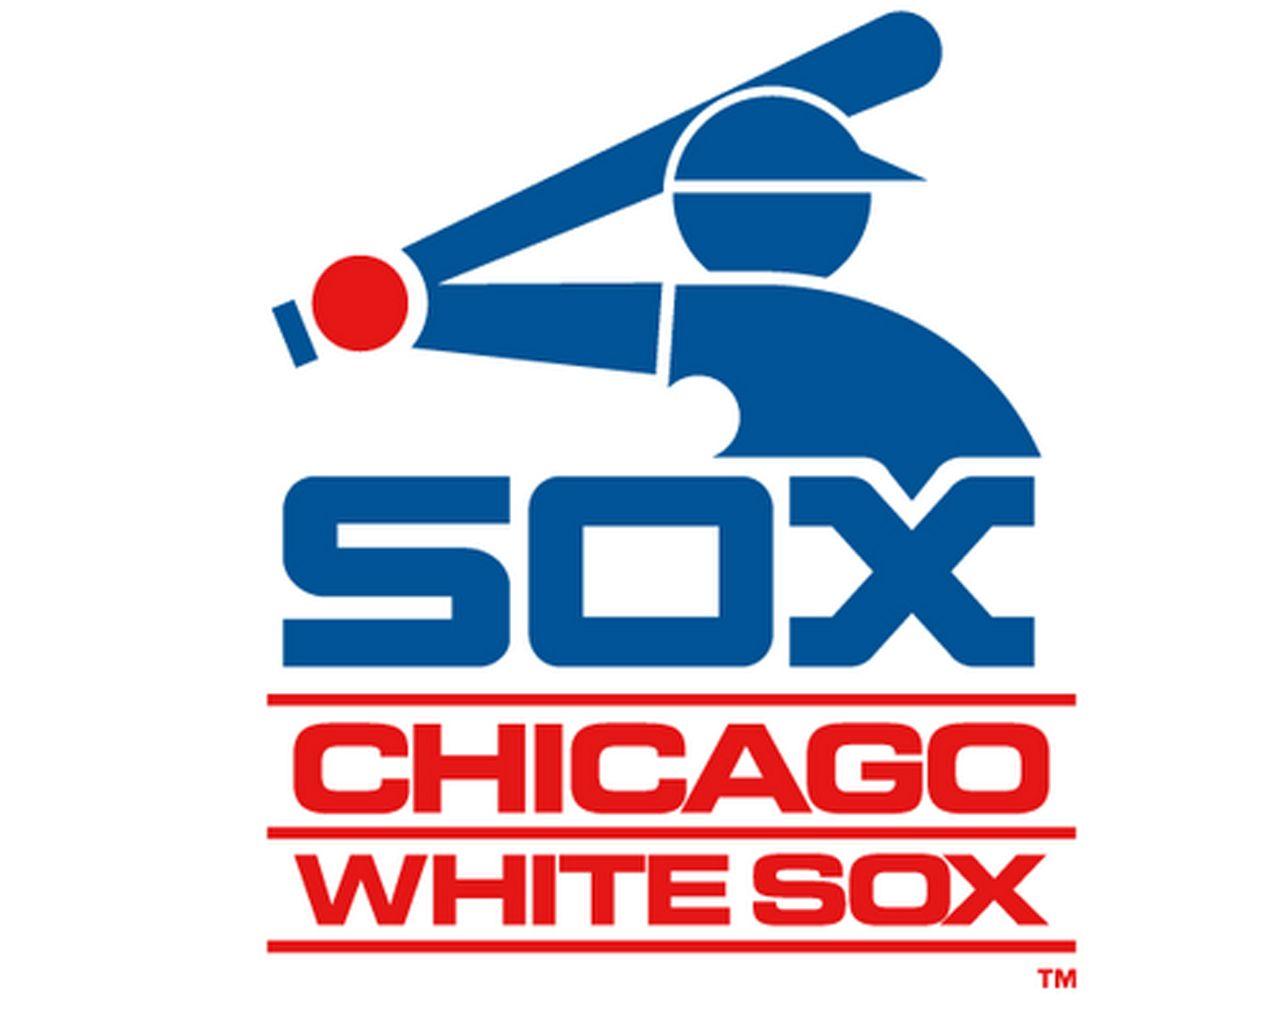 White Sox Old Logo - Chicago White Sox Old Logo wallpaper - Clip Art Library